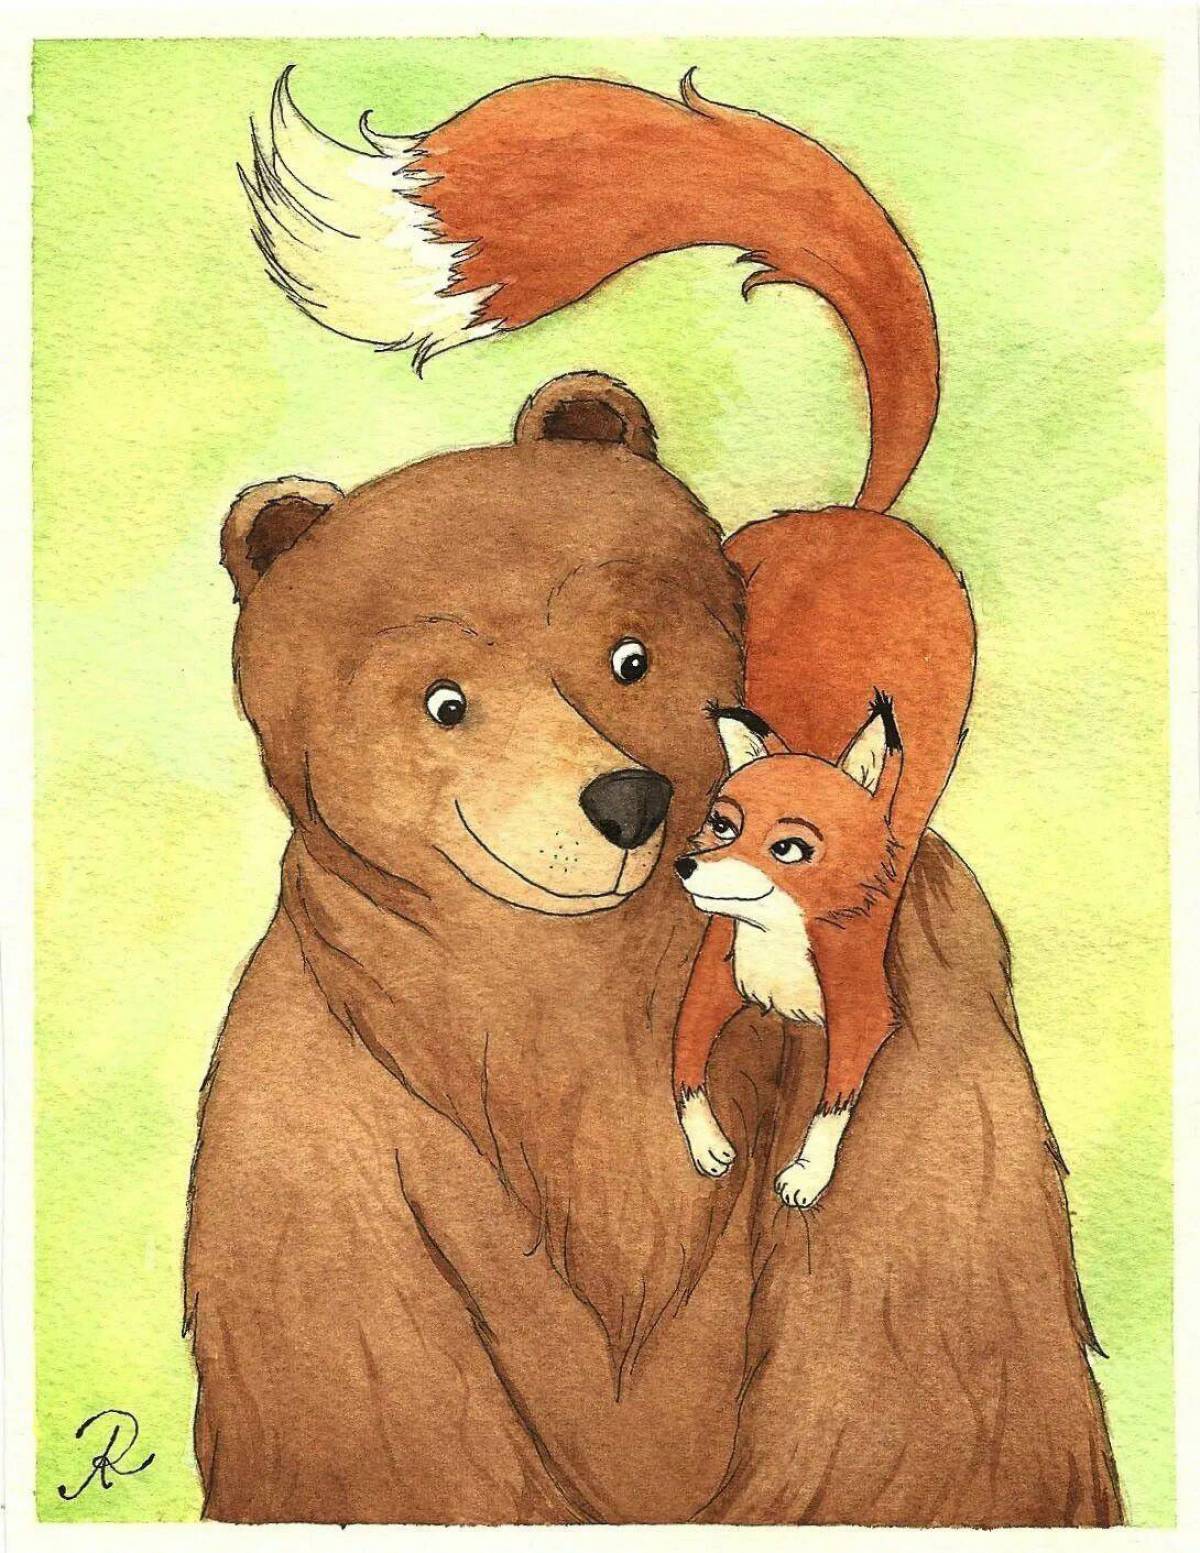 The fox and the bear. Медведь и лиса. Медвежонок обнимает лисичку. Лиса обнимает медведя. Лис и медведь.